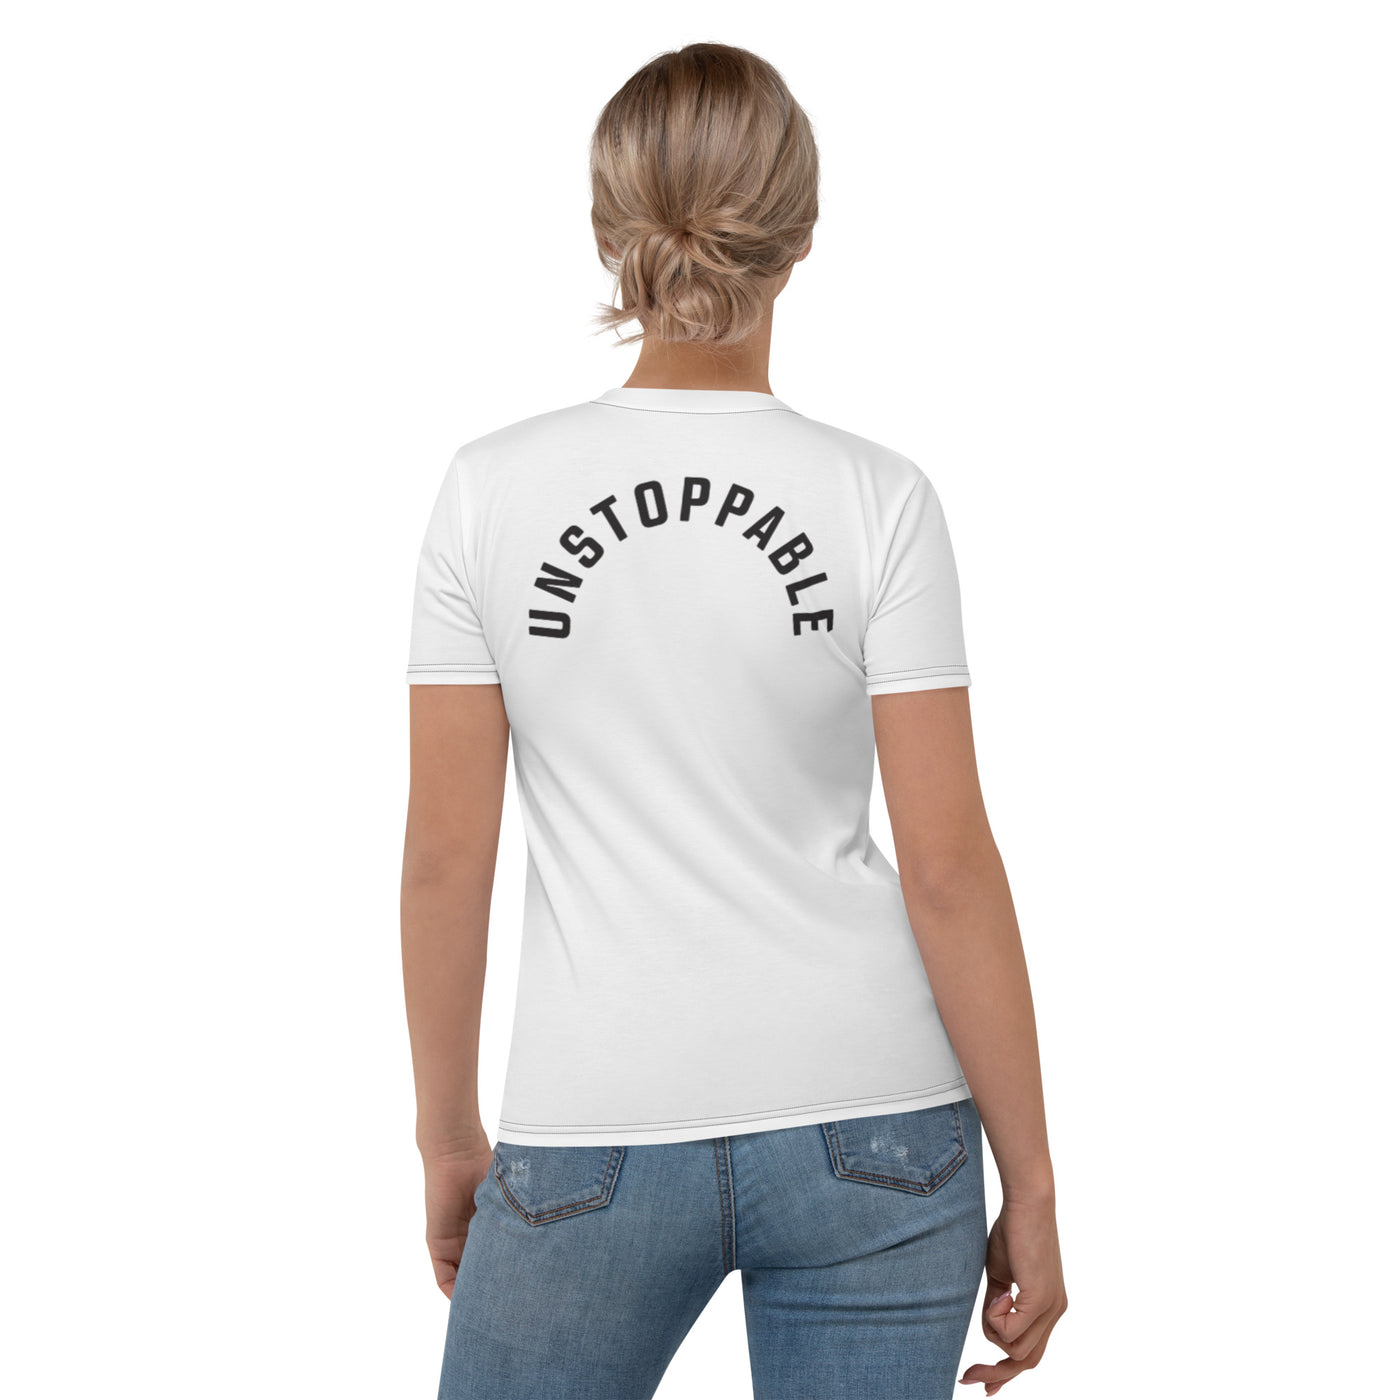 UNSTOPPABLE Women's T-shirt